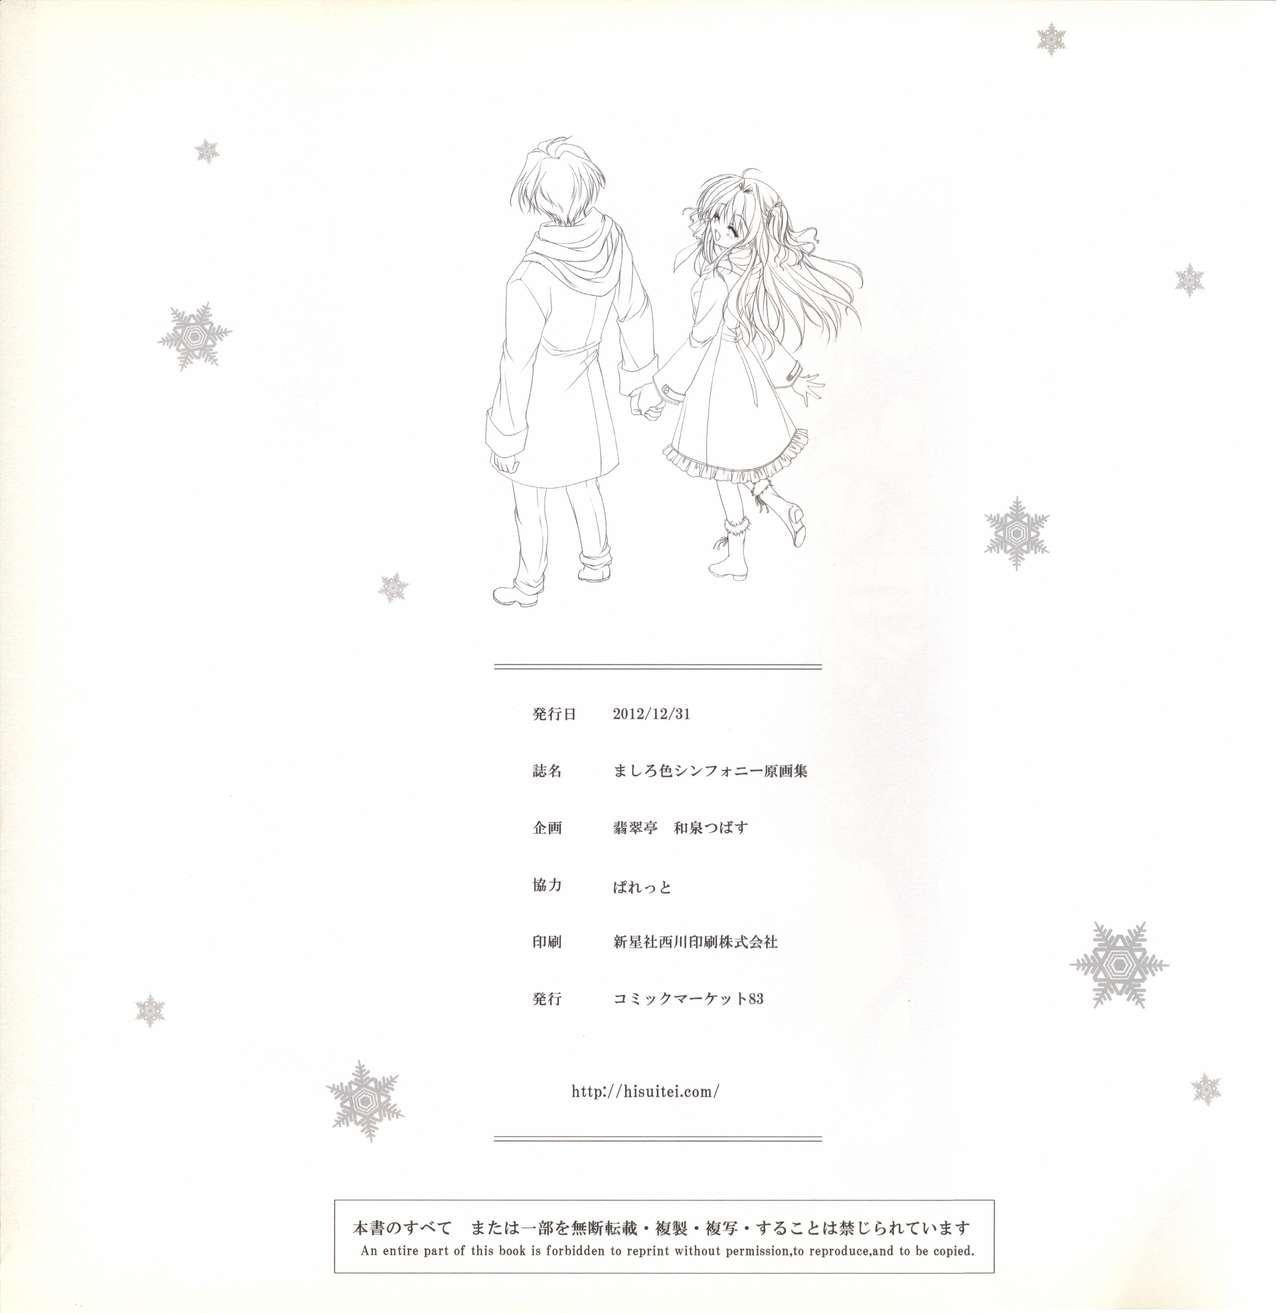 Mashiro-Iro Symphony illustration art book 163